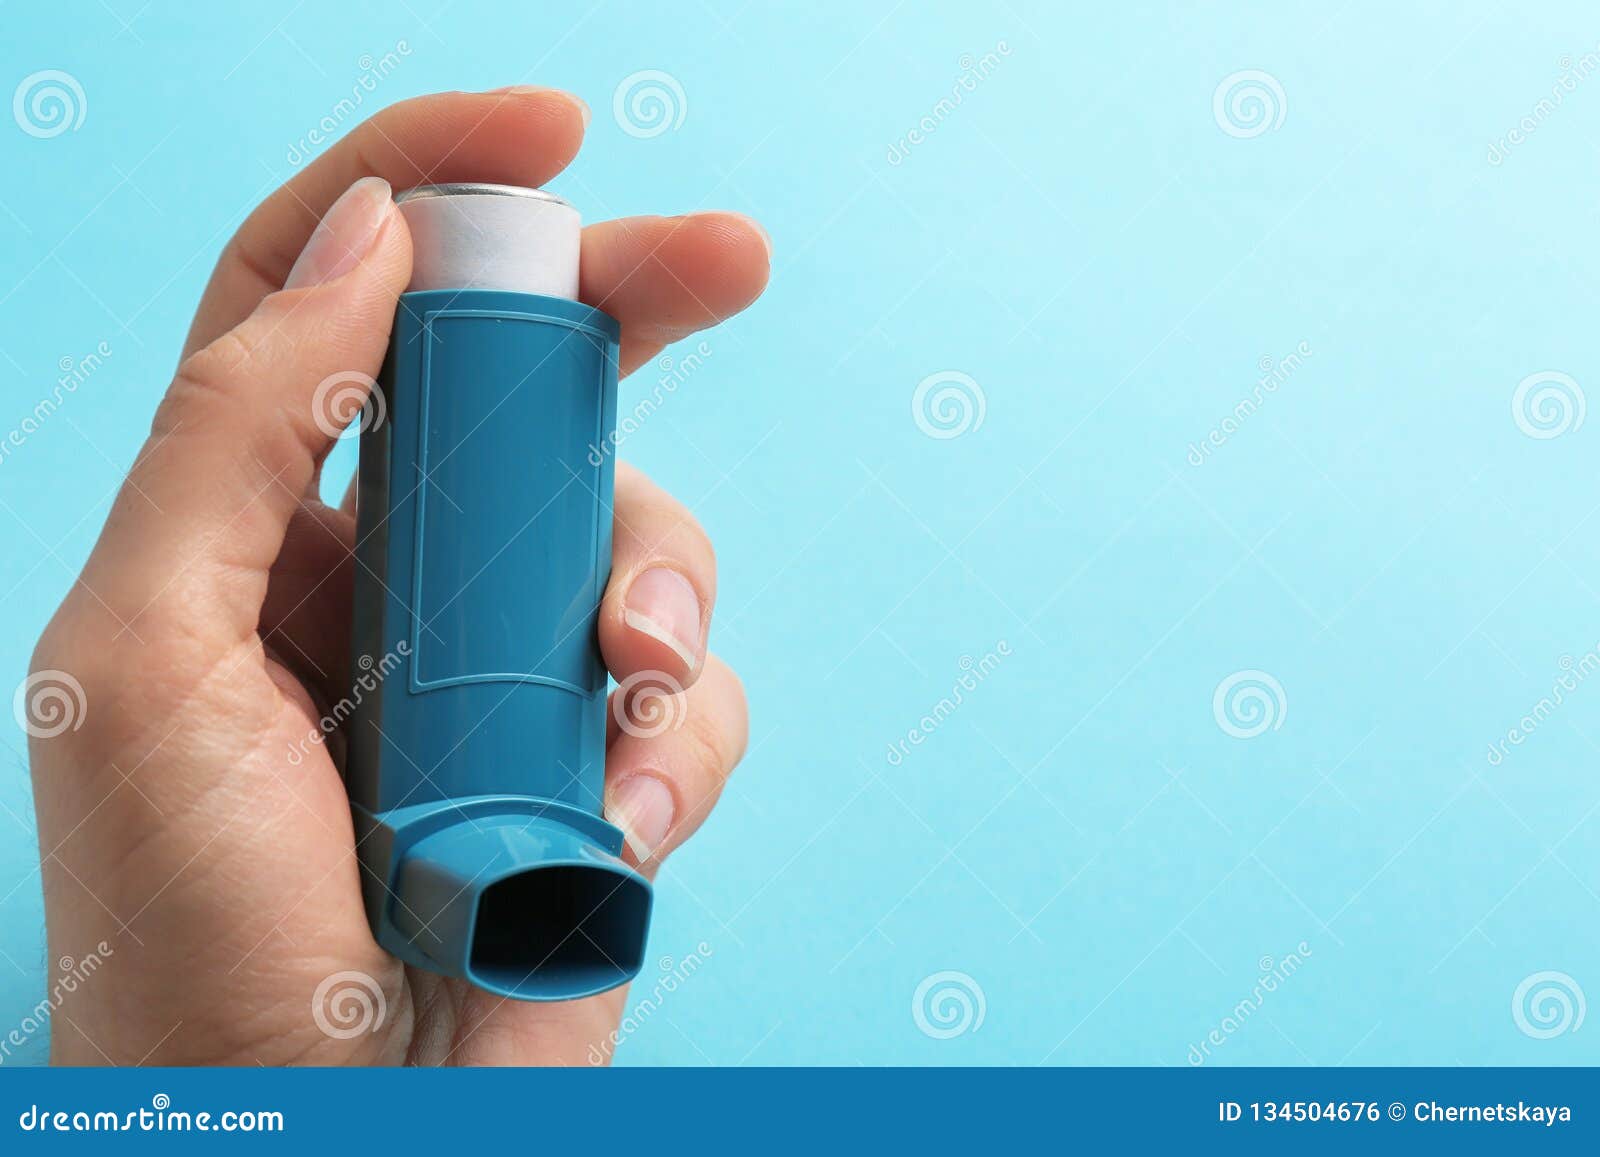 Asthma Inhalers Colors - Asthma Lung Disease